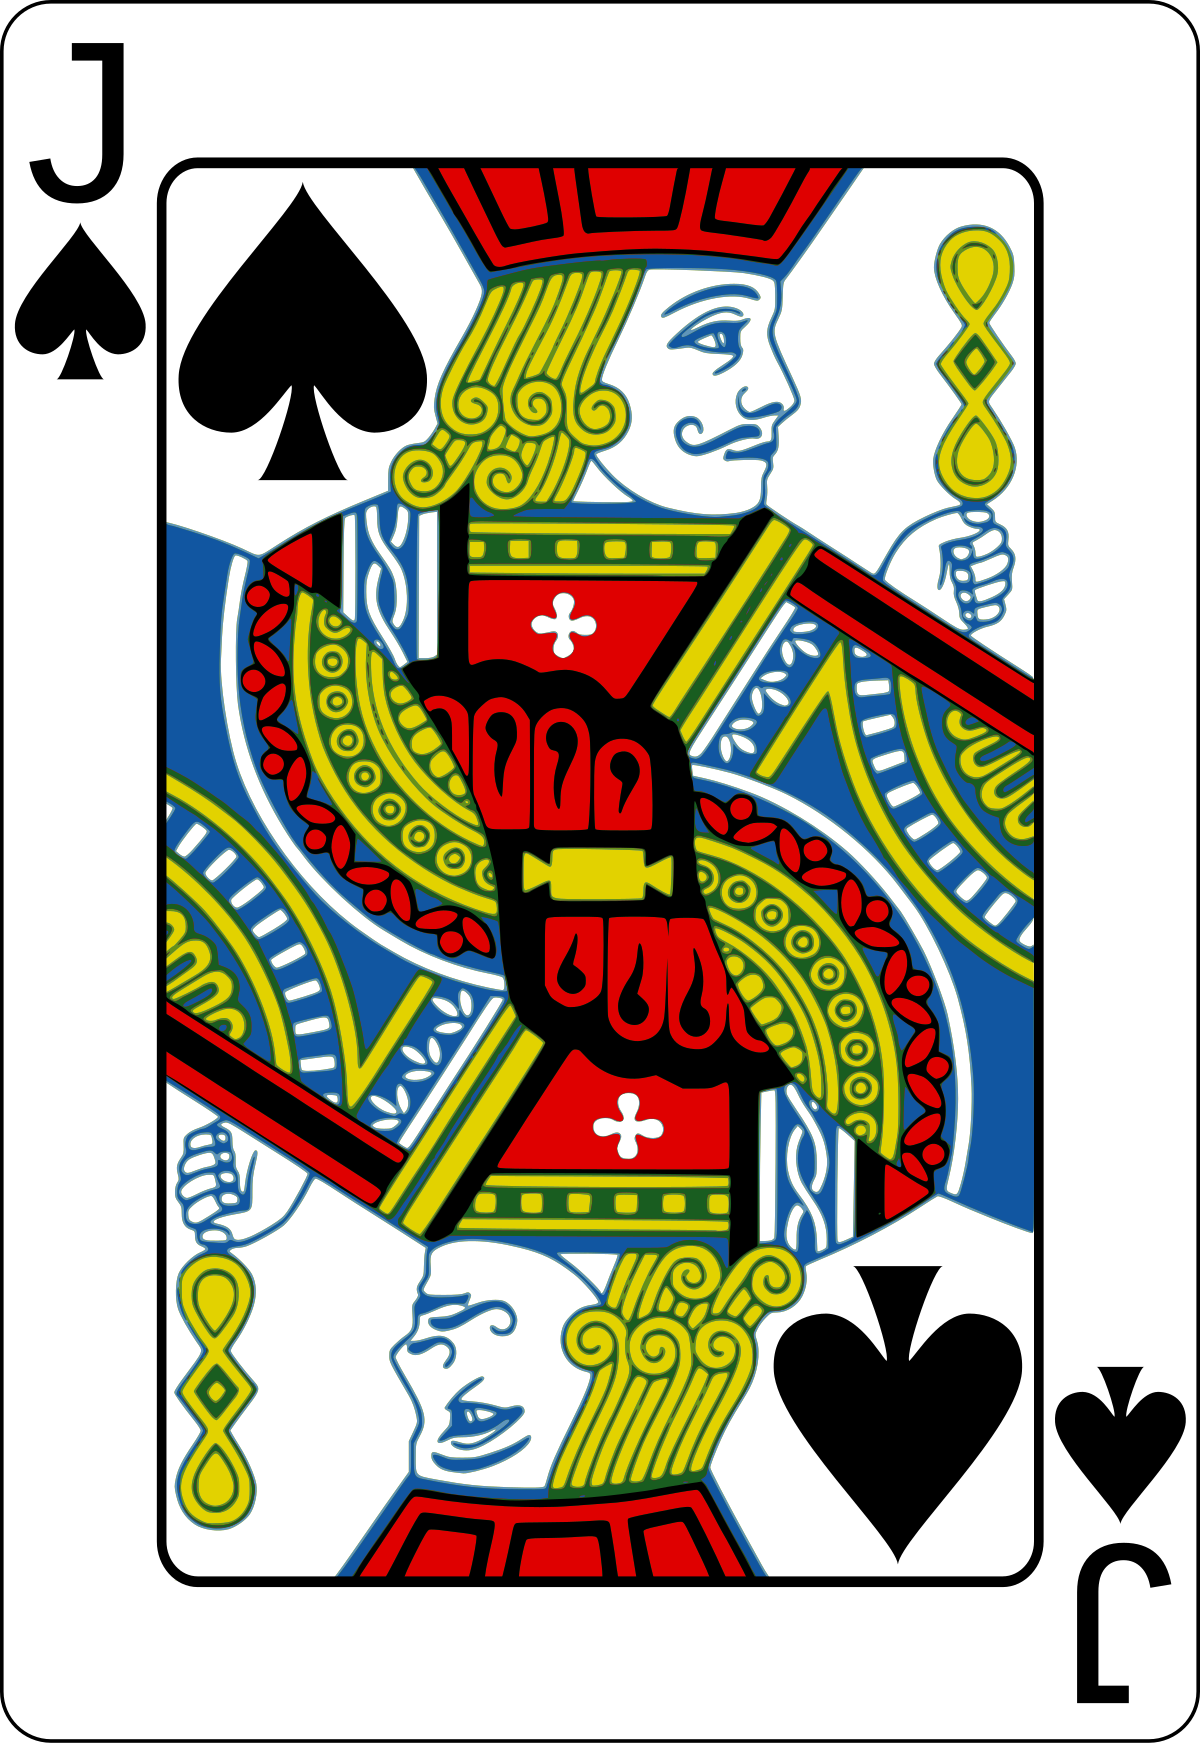 File:Jack of spades2.svg - Wikimedia Commons.